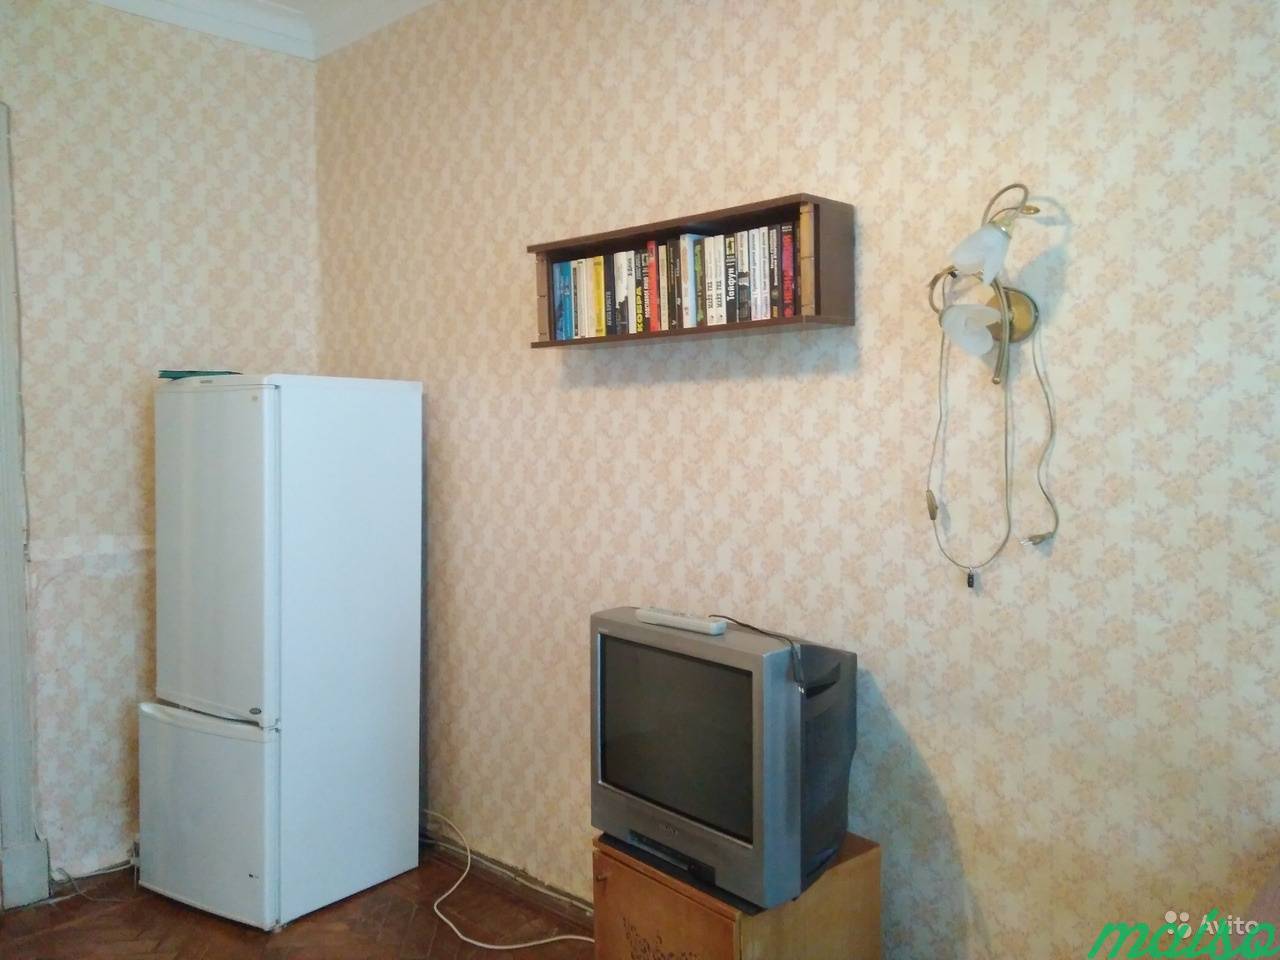 Комната 13 м² в 4-к, 2/5 эт. в Санкт-Петербурге. Фото 5